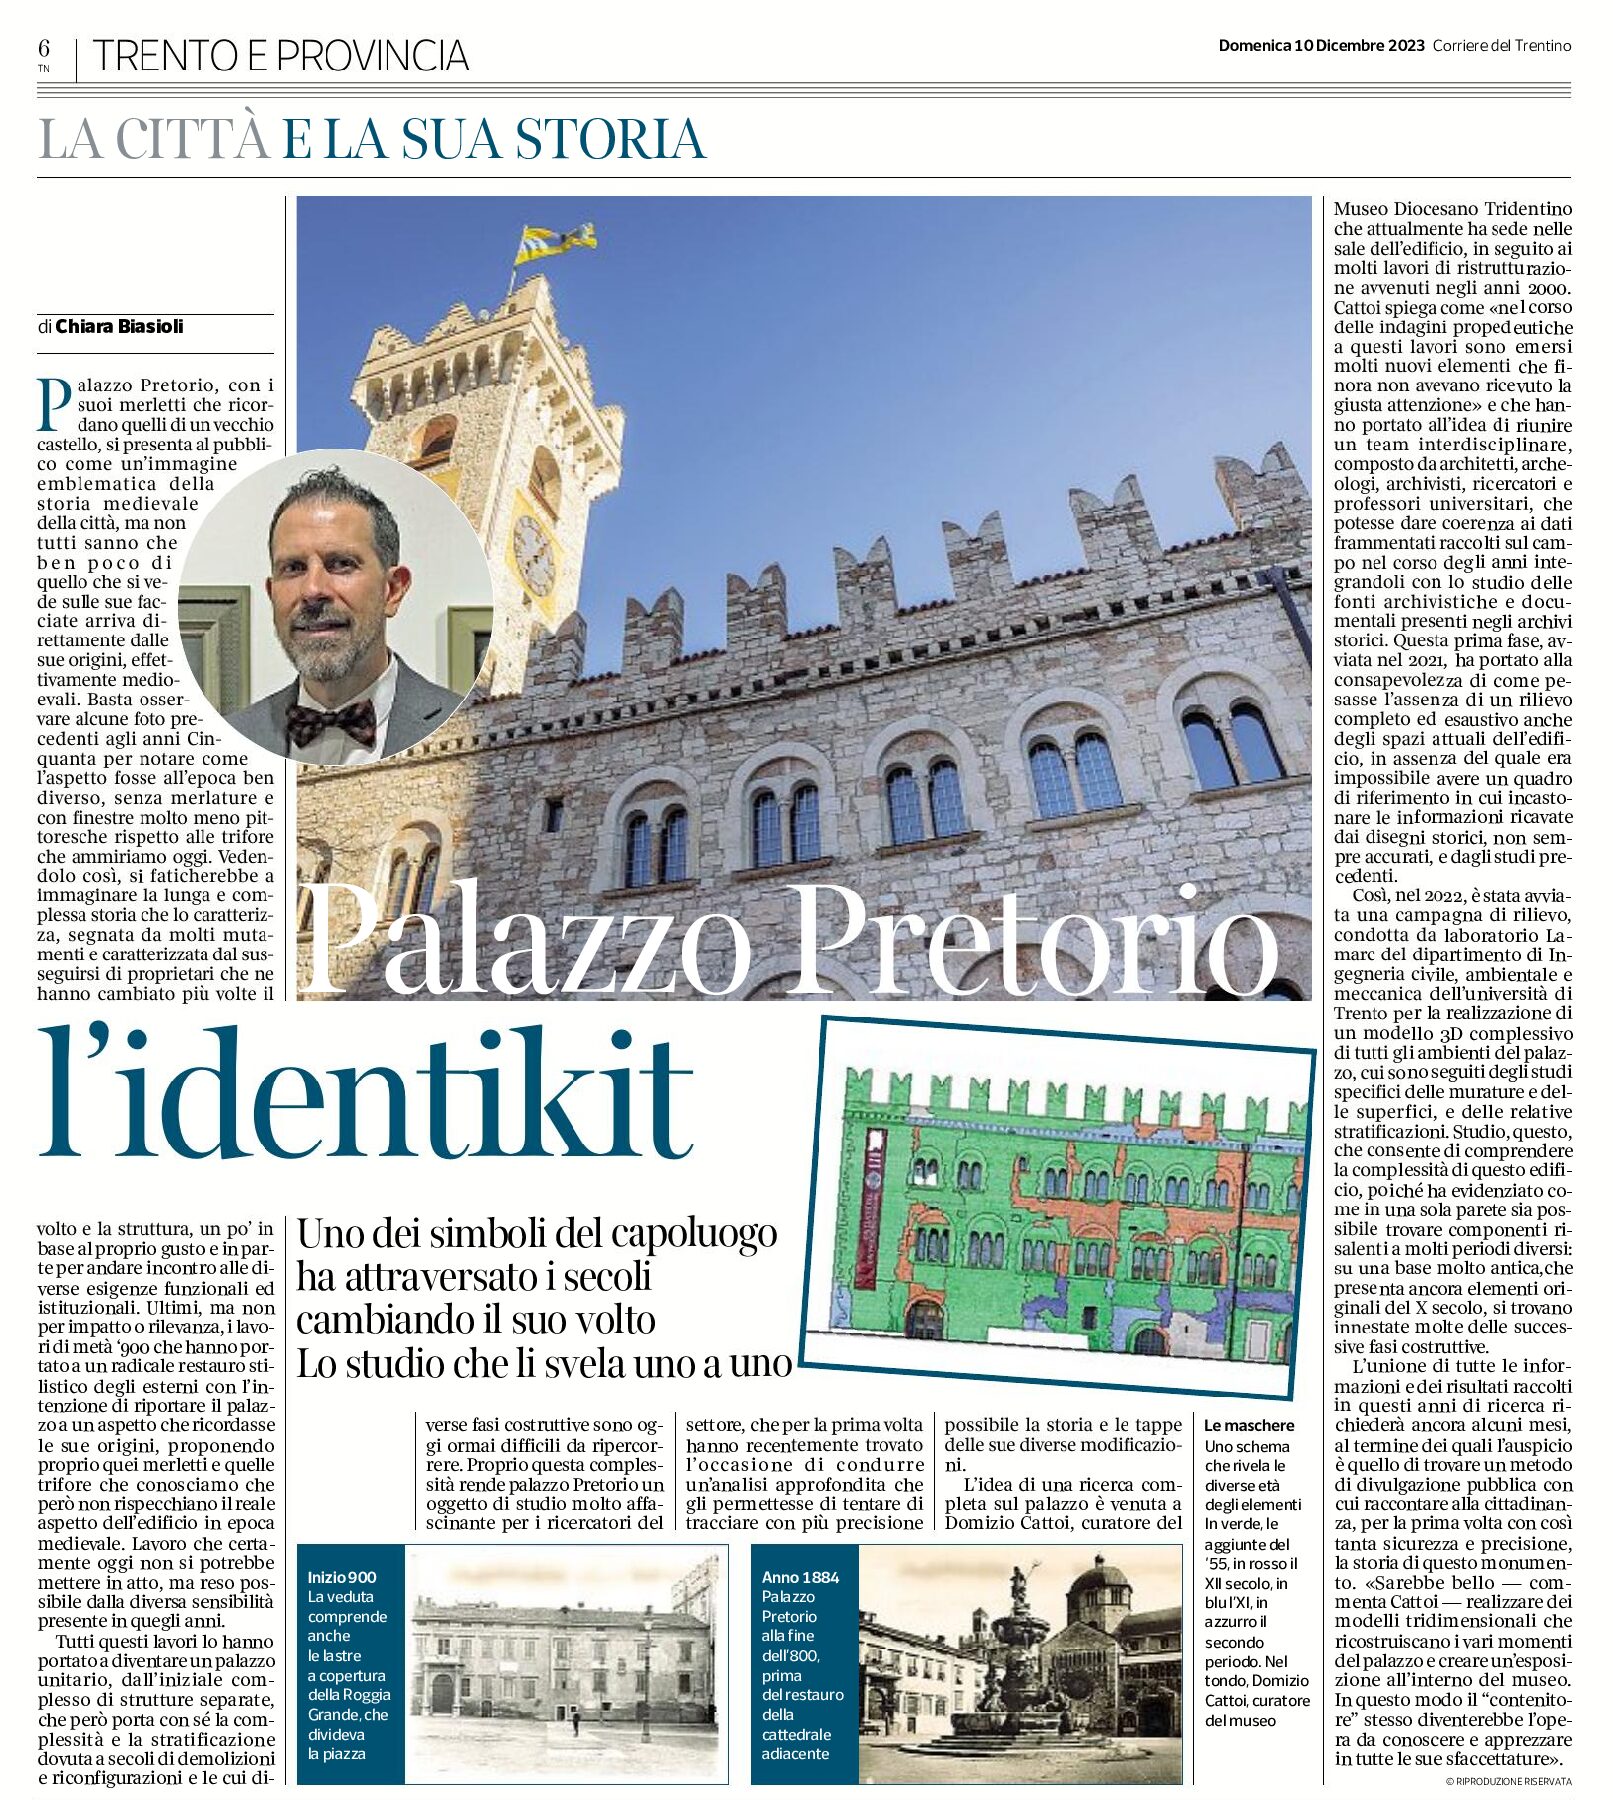 Trento: Palazzo Pretorio, storia